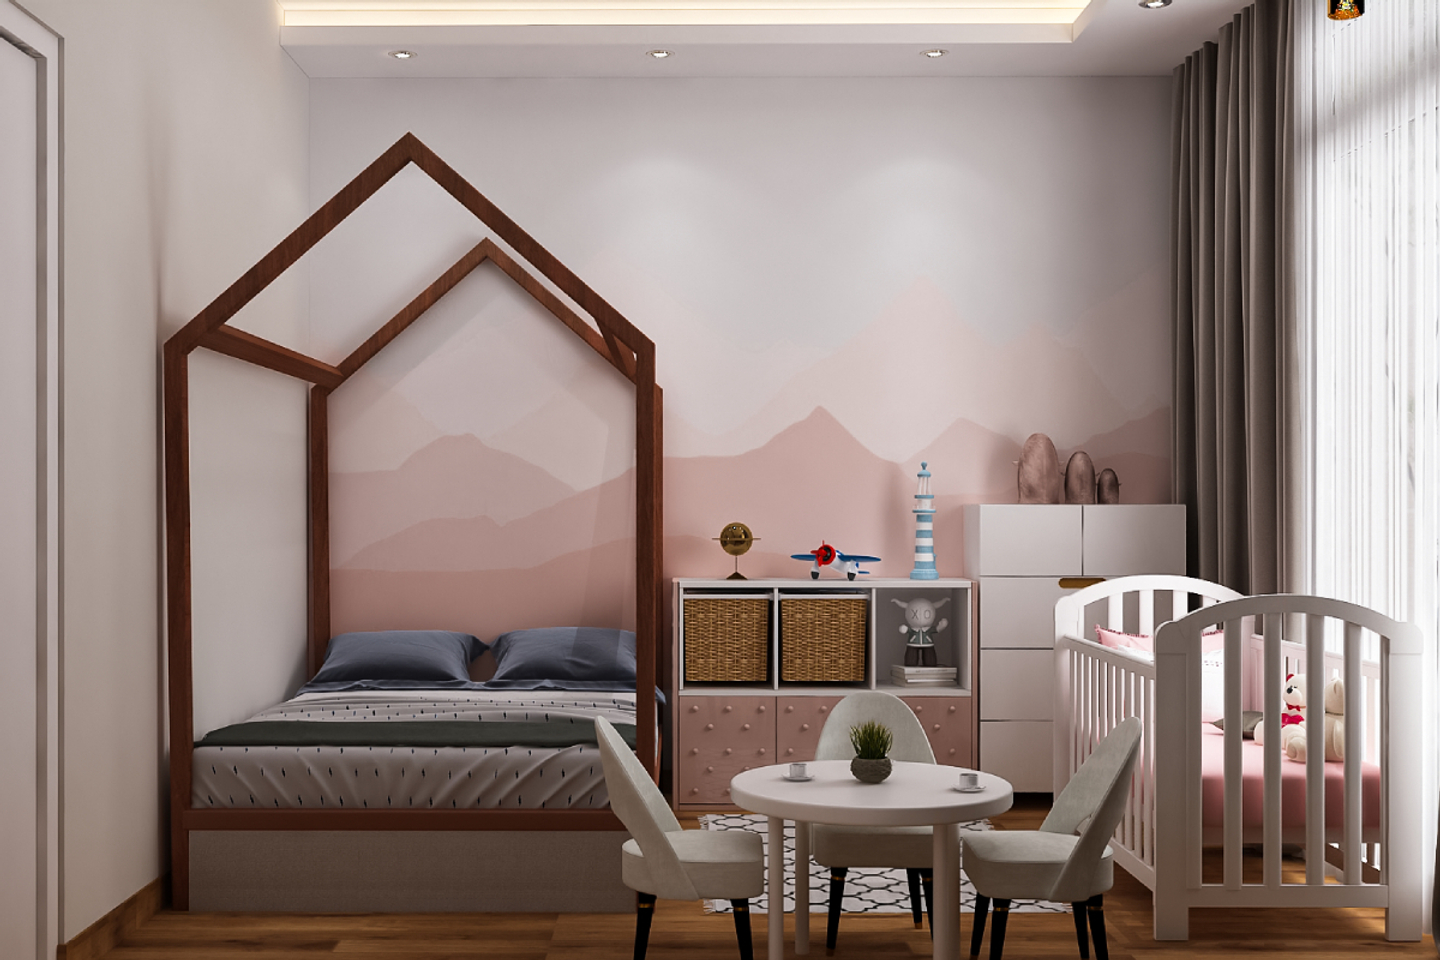 Boy's Room Design For Two - Livspace